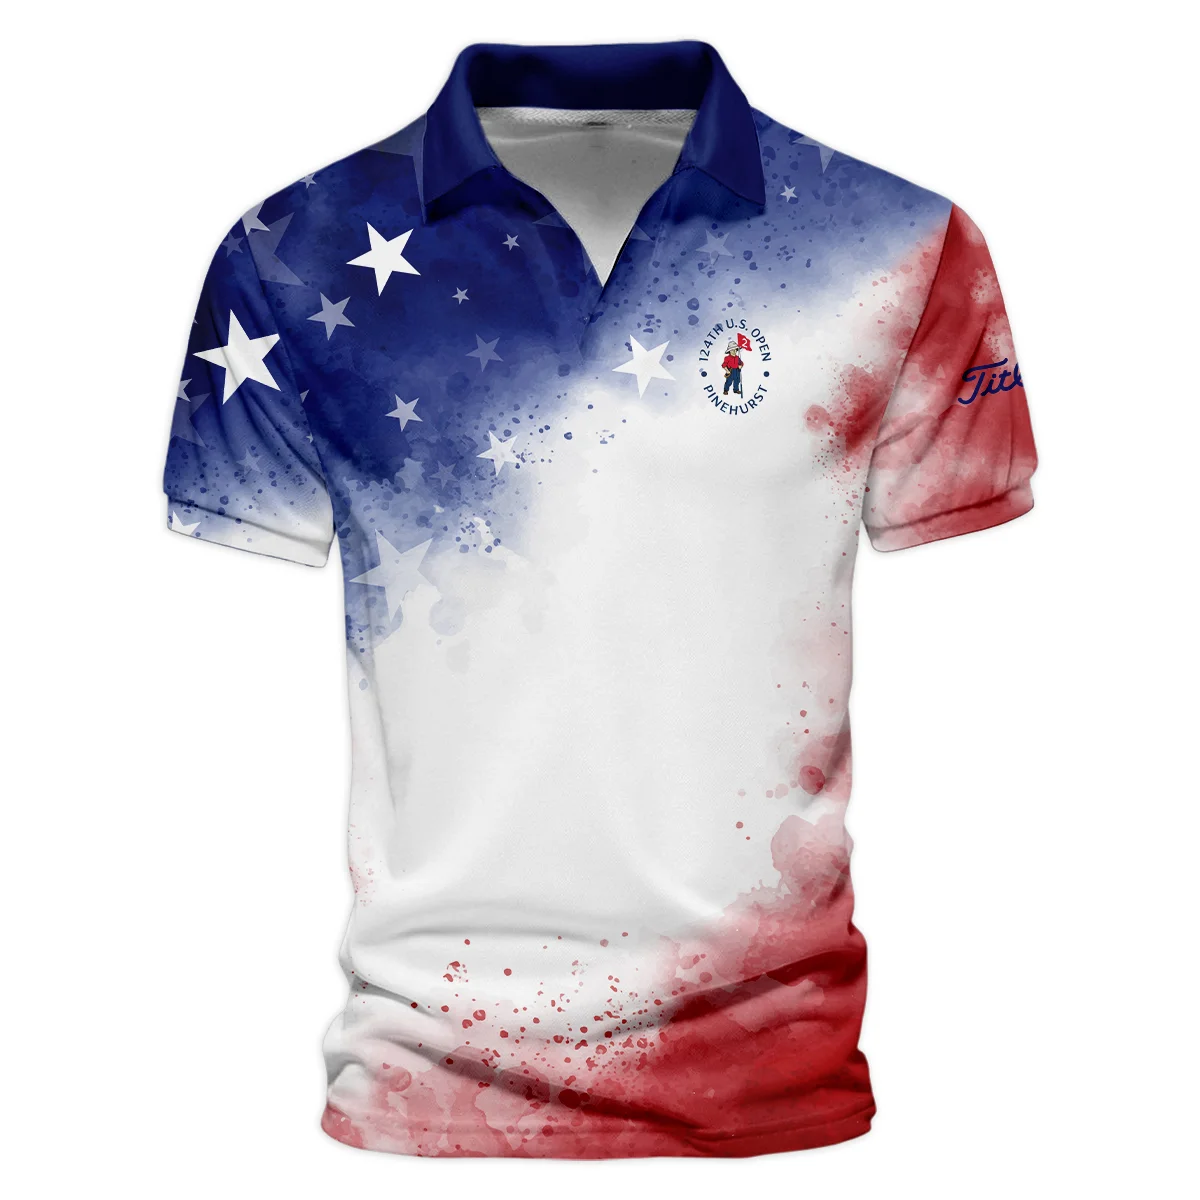 124th U.S. Open Pinehurst Titleist Blue Red Watercolor Star White Backgound Unisex T-Shirt Style Classic T-Shirt